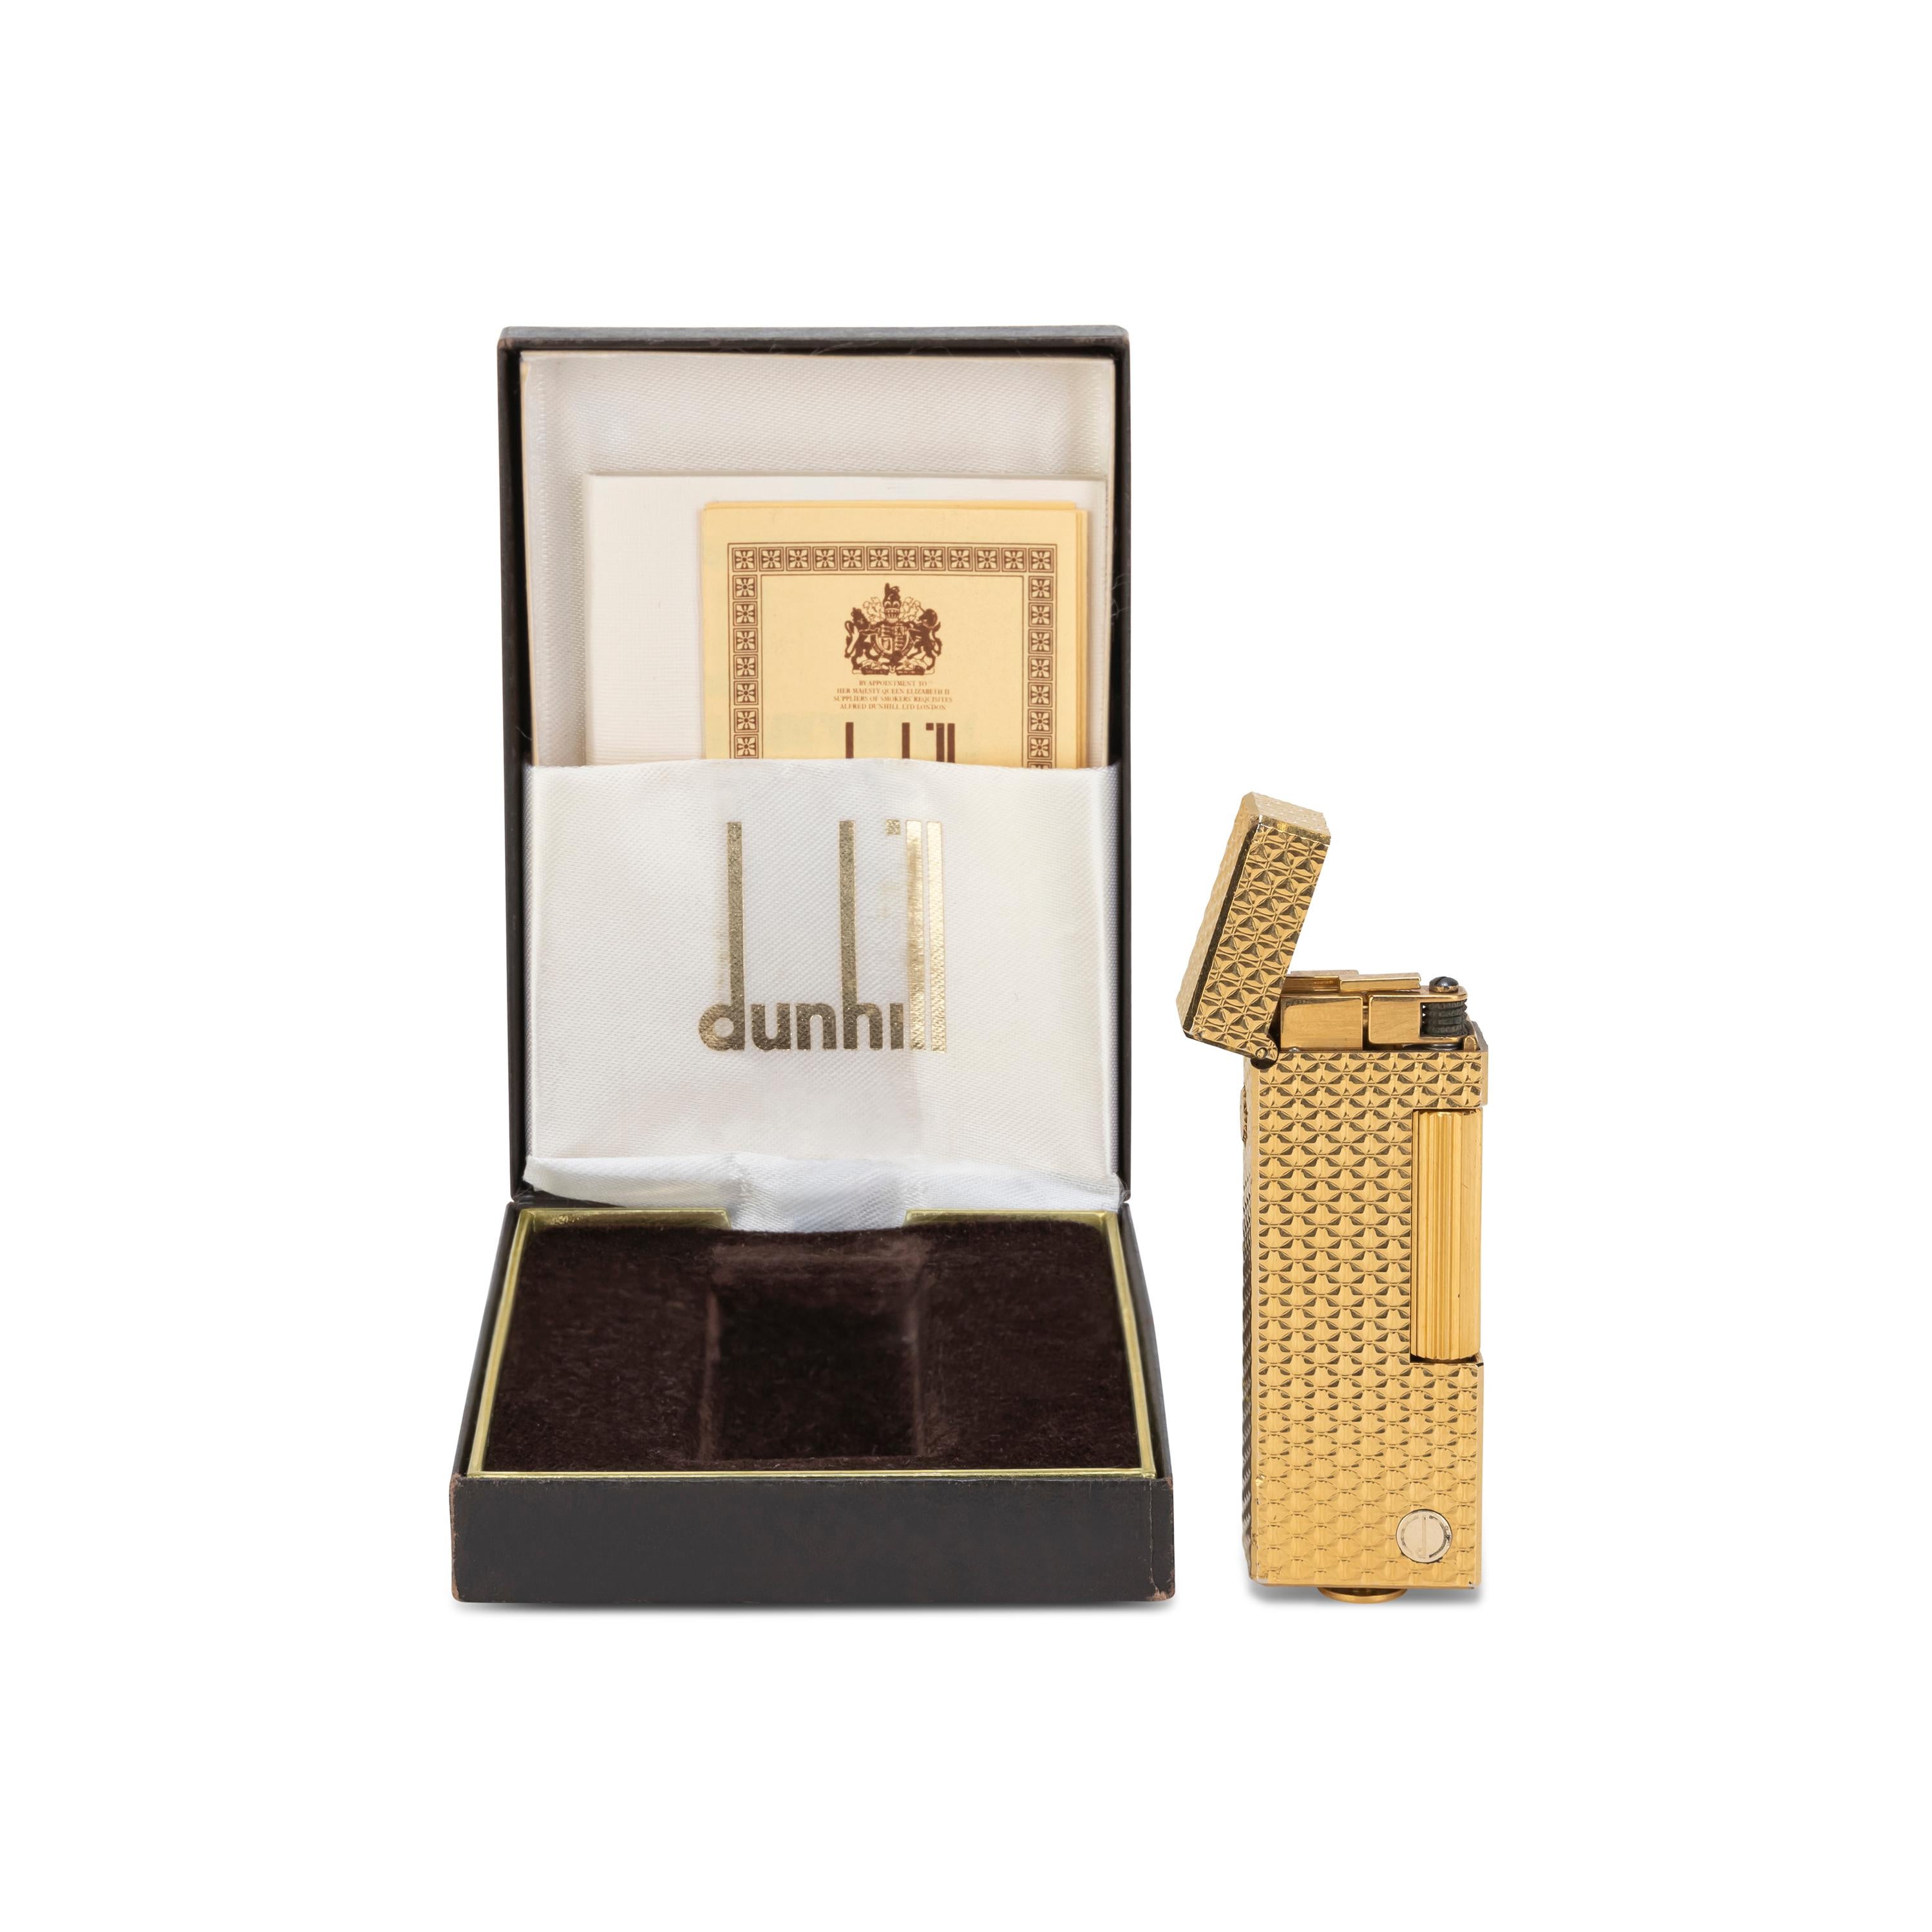 Art Deco Original “James Bond” Rare & Iconic Vintage Dunhill Gold Swiss Lighter